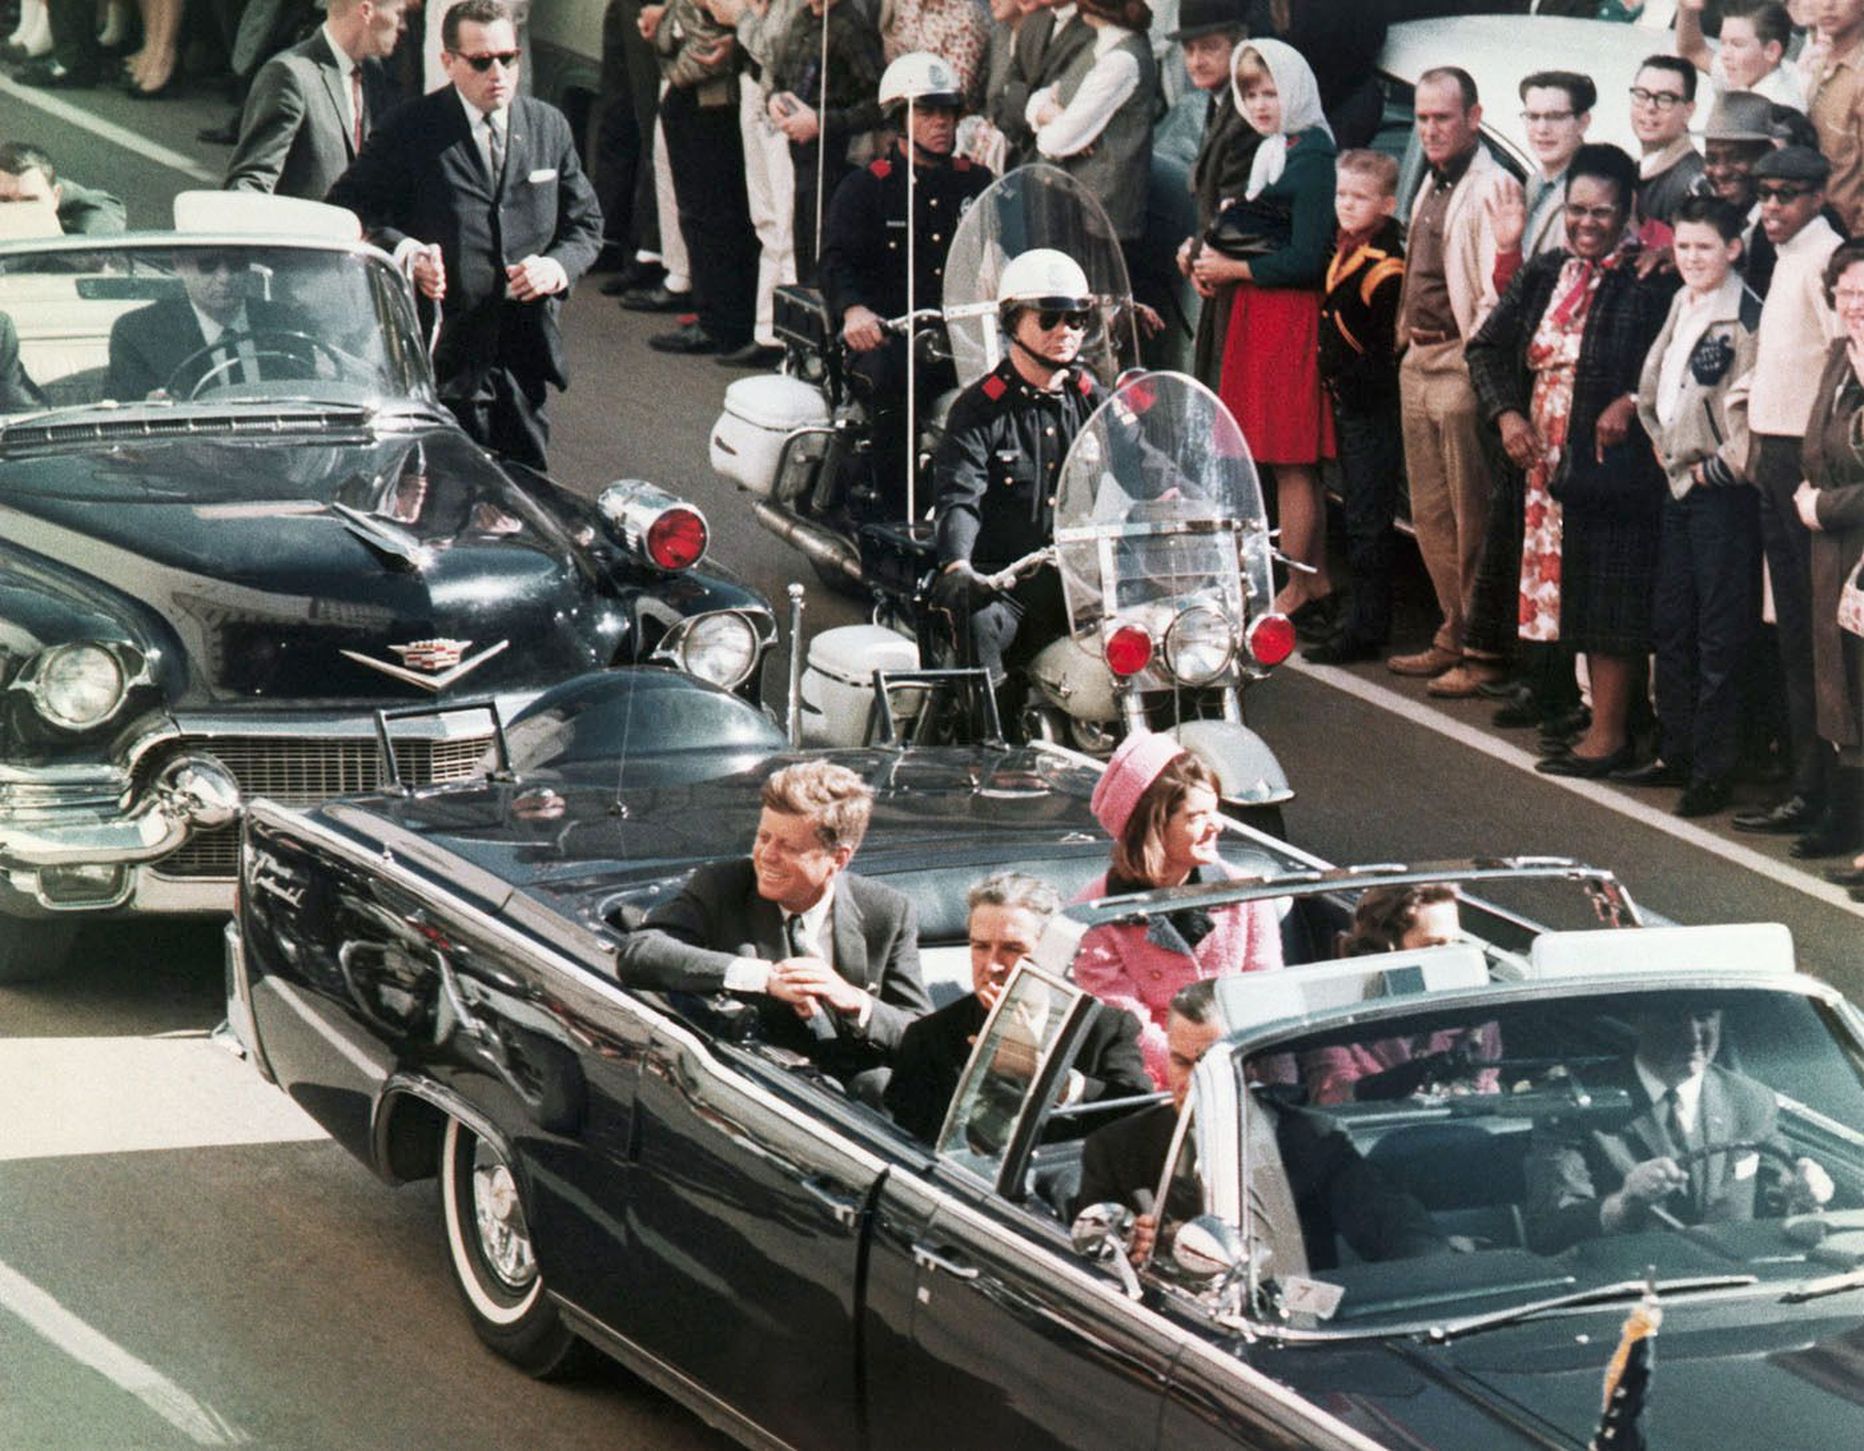 John ja Jacqueline Kennedy 22. novembril 1963 Dallases